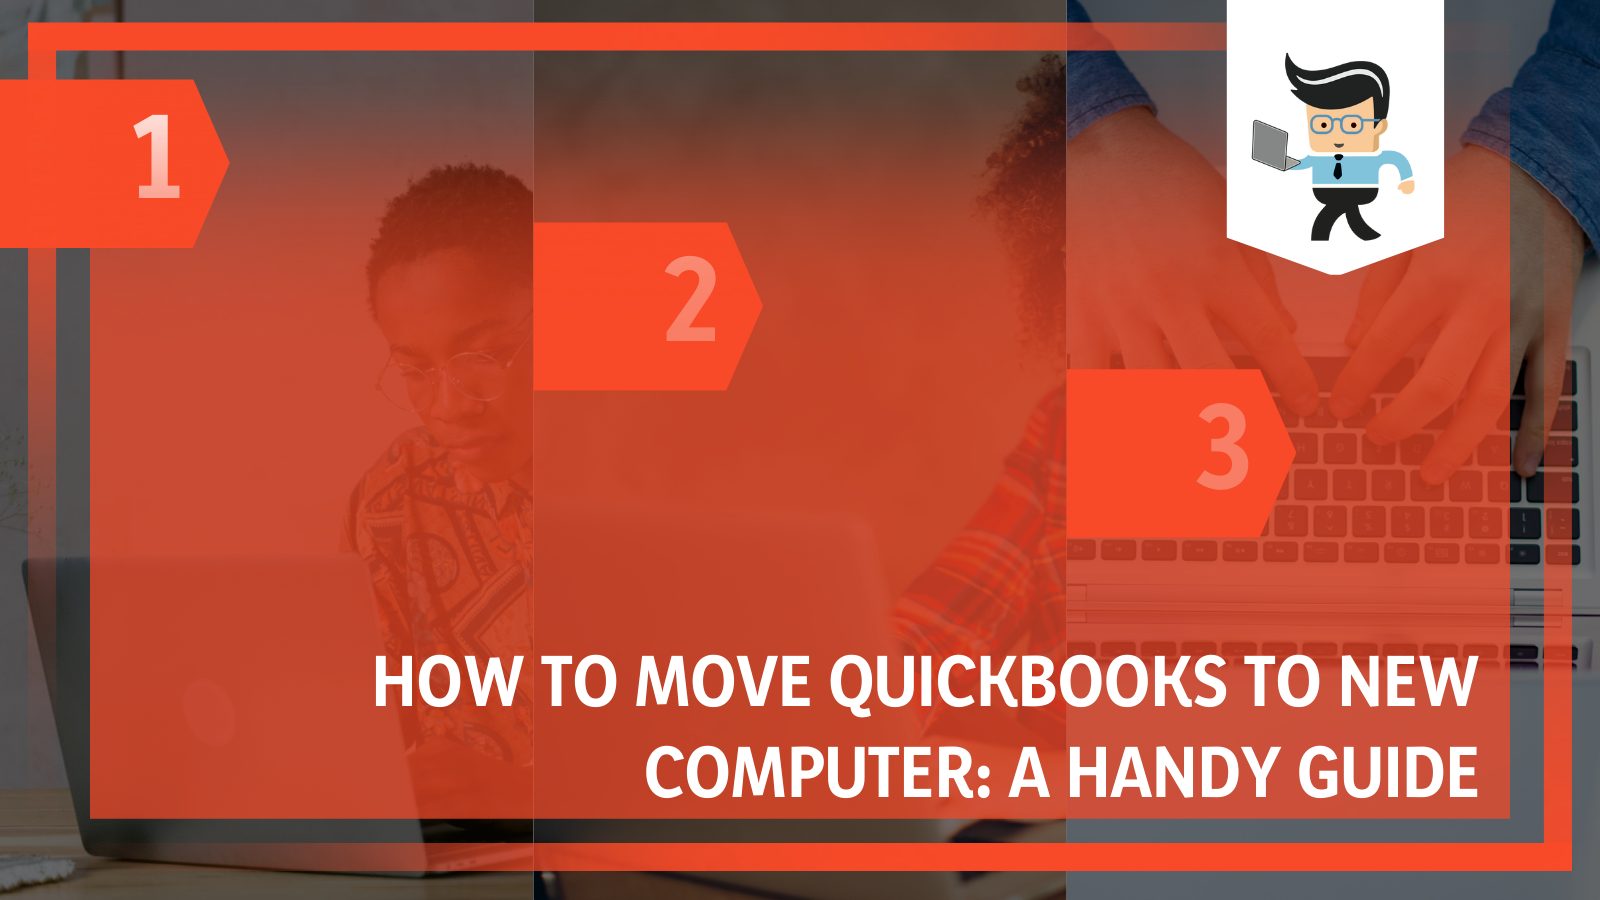 Move QuickBooks to New Computer